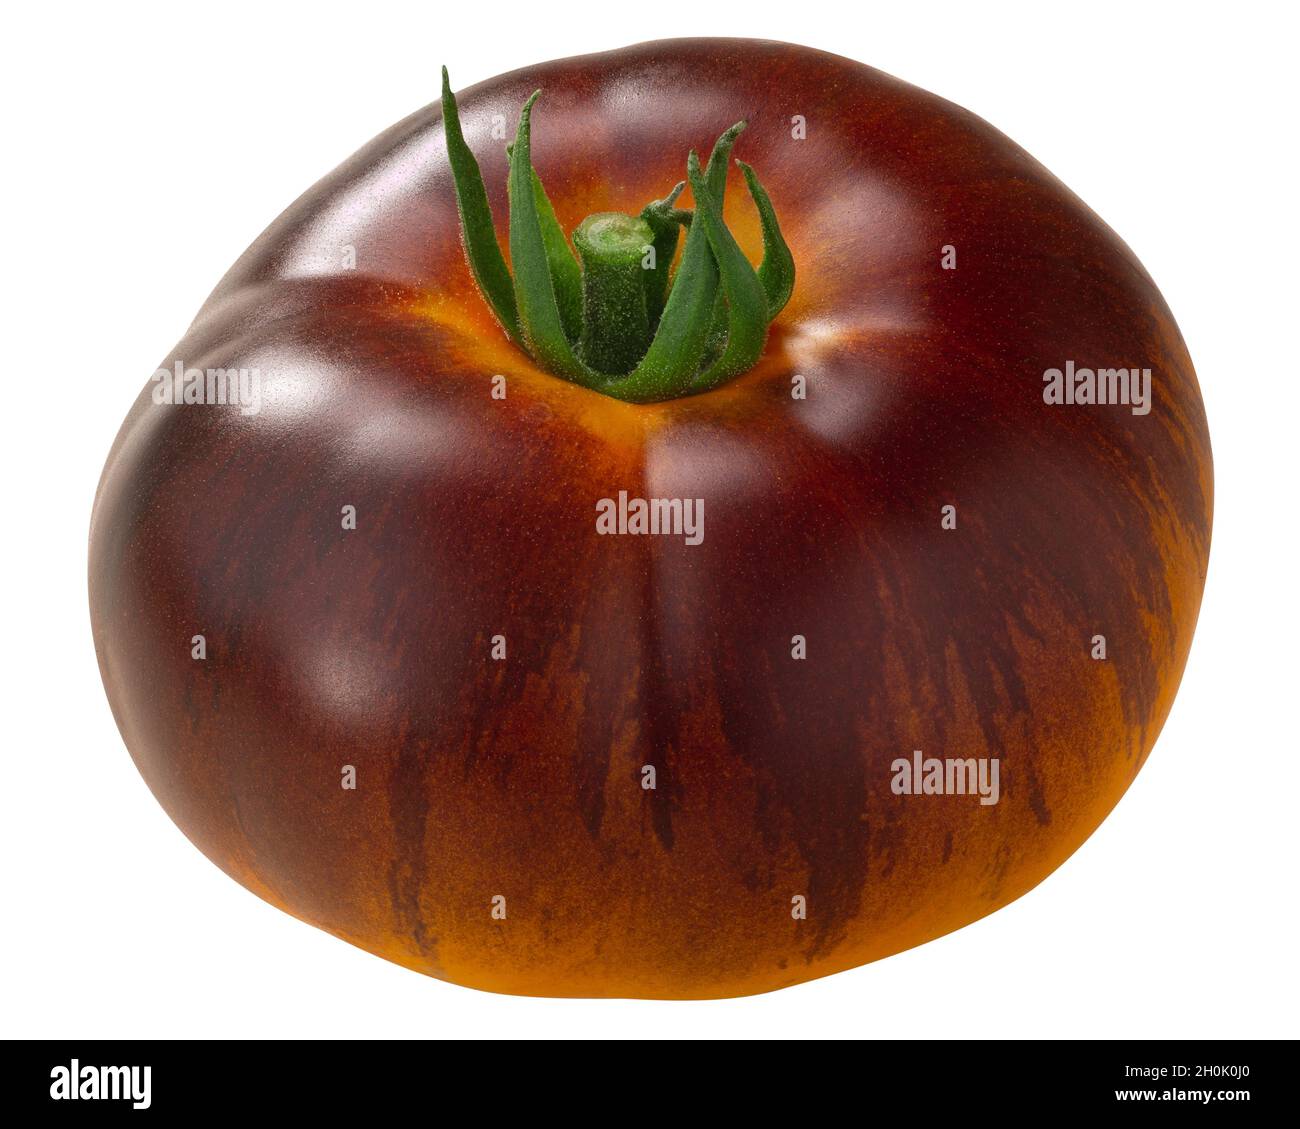 P20 x Beauty King heirloom tomato (Solanum lycopersicum fruit) isolated Stock Photo